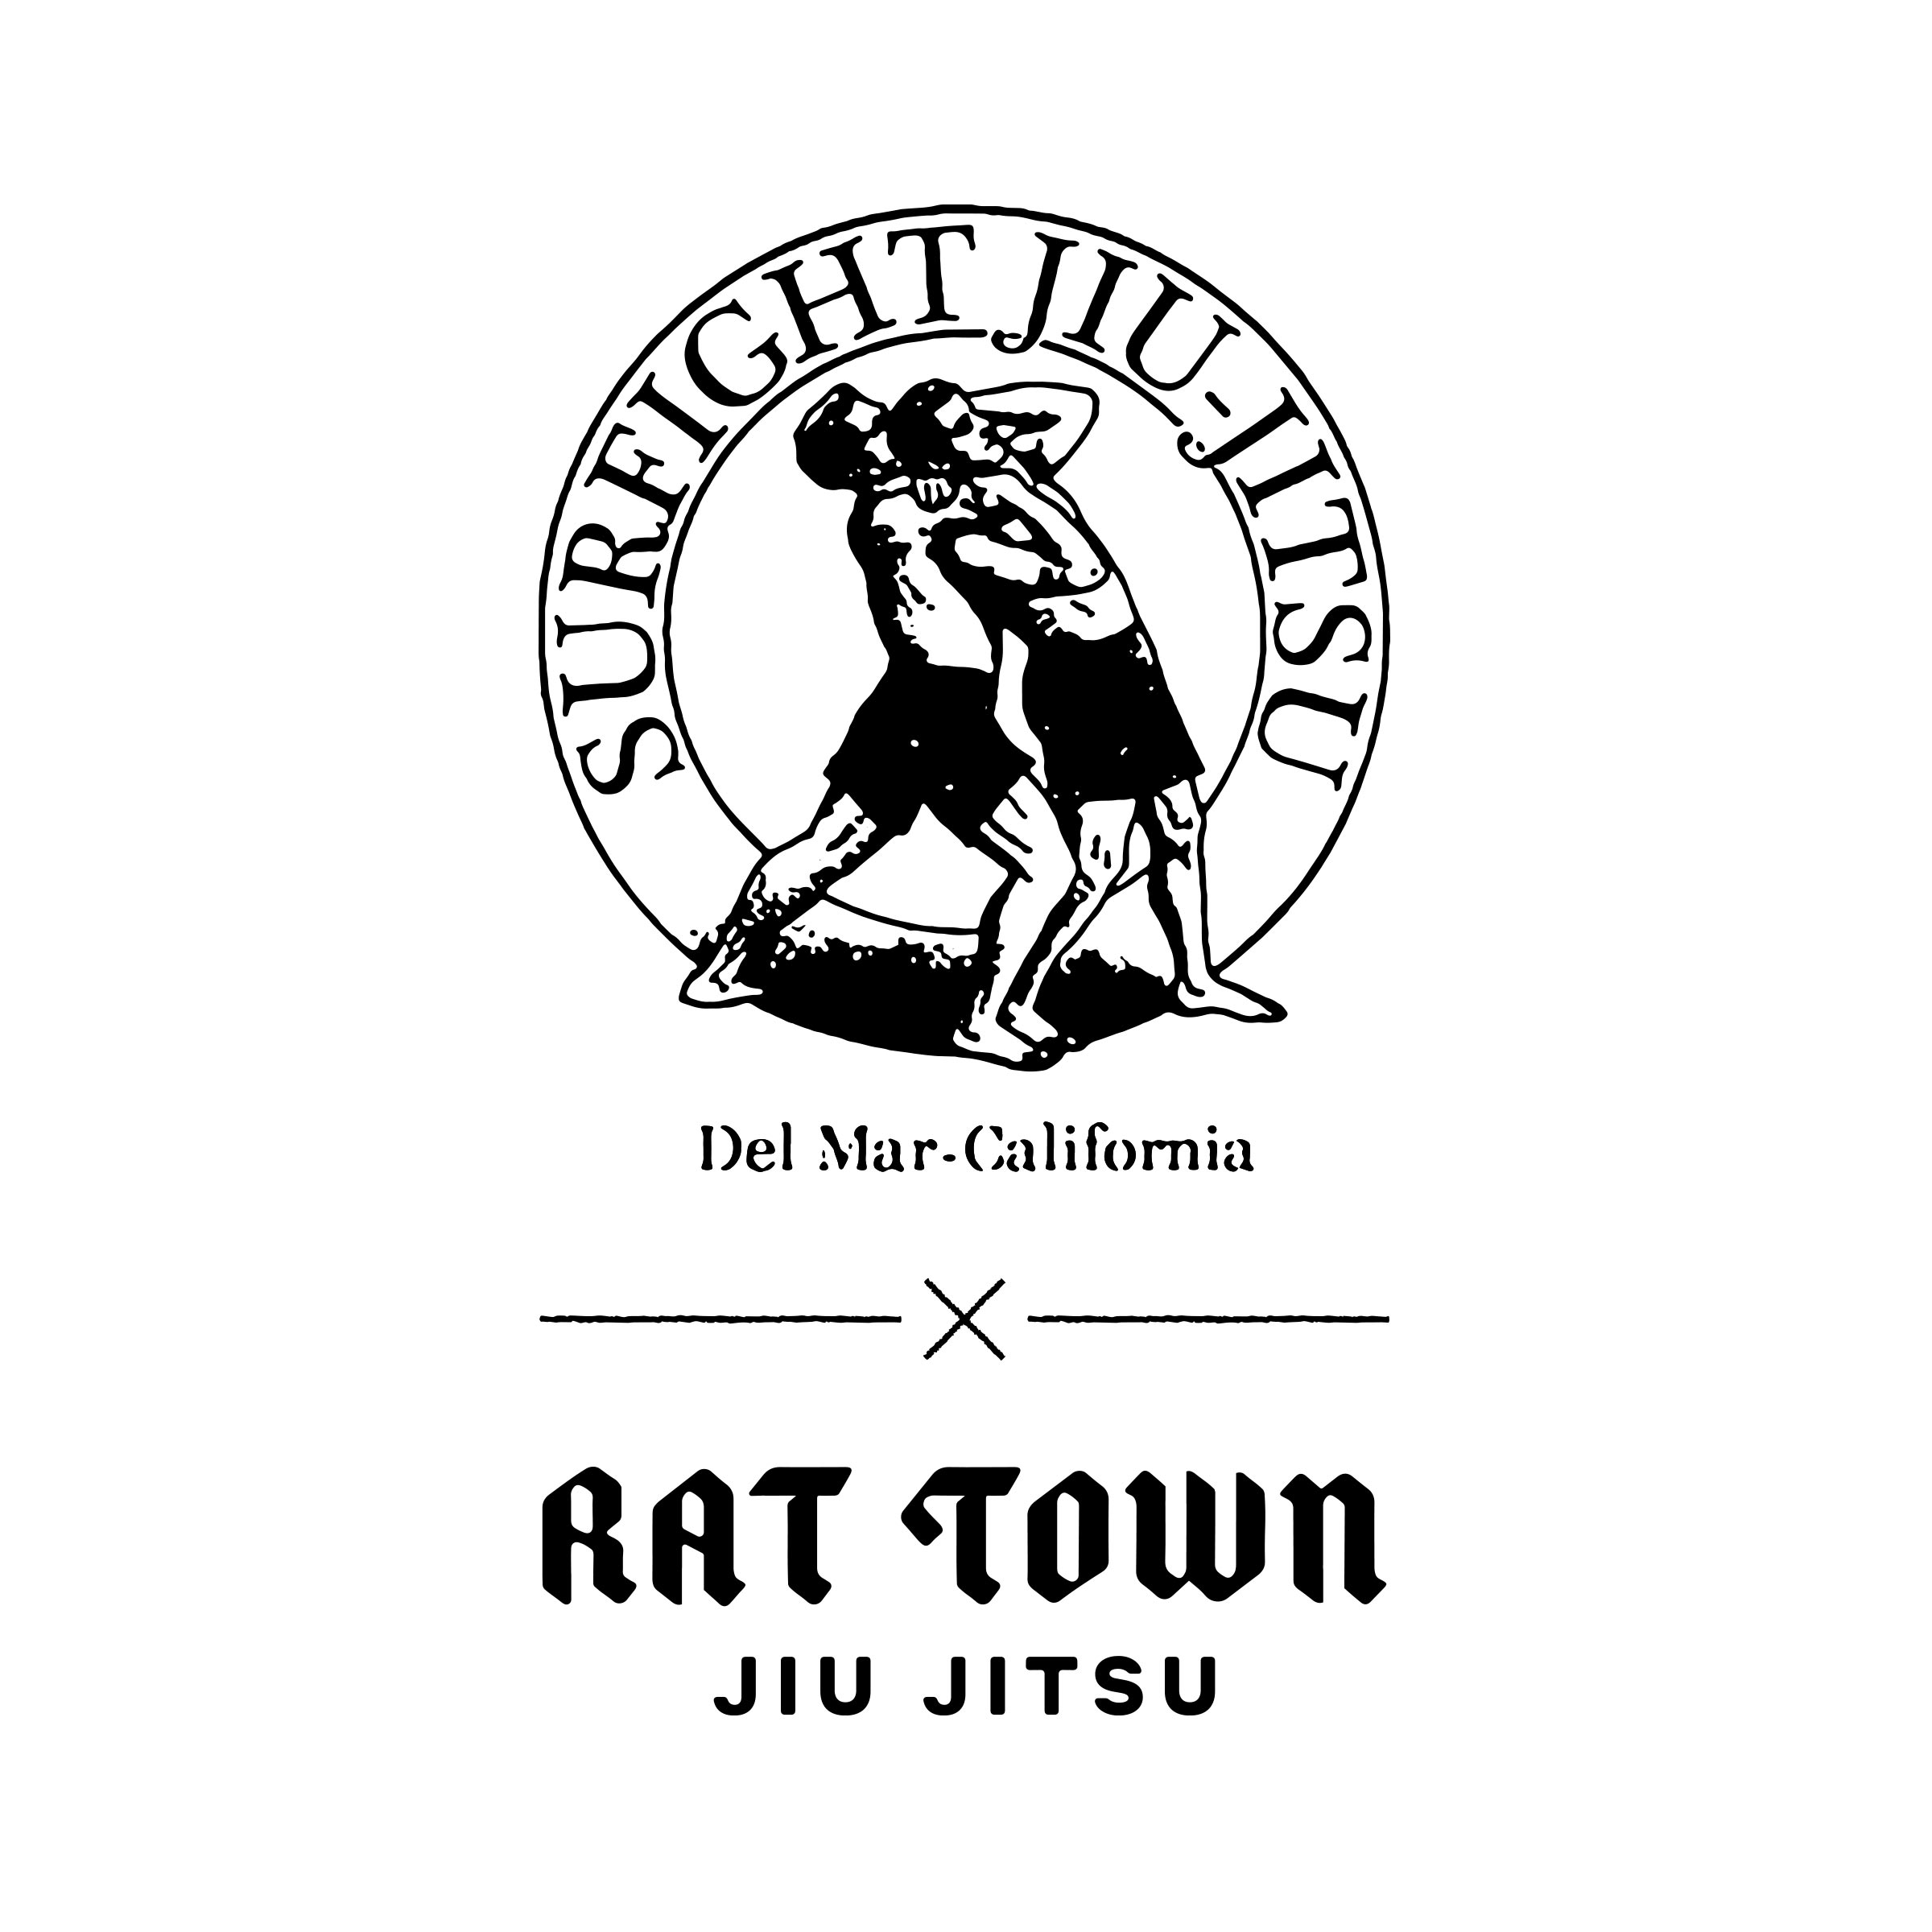 Logo Design, Brand Development, and Graphic Design for Jiu Jitsu